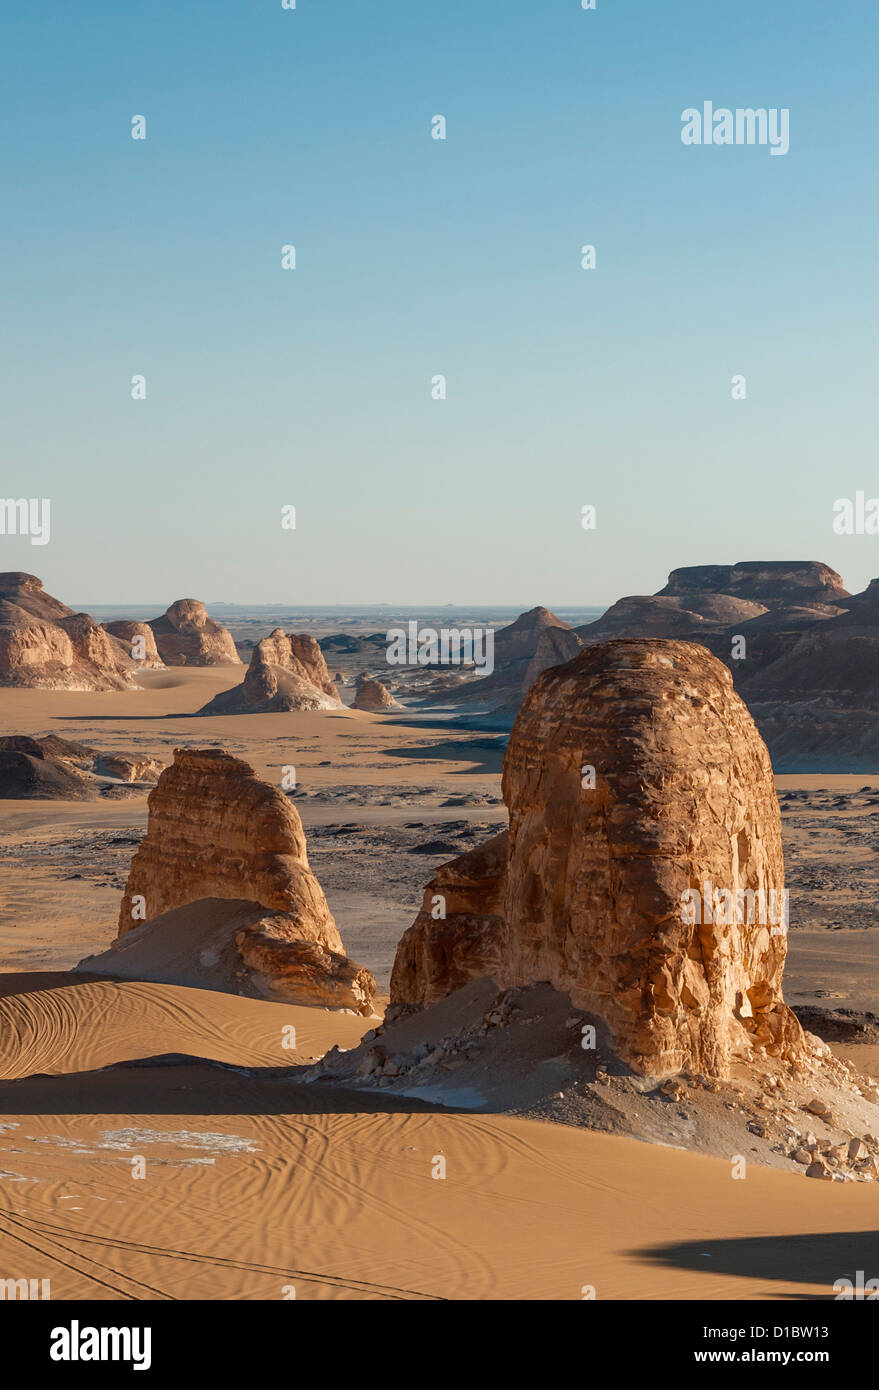 El Akabat (Agabat) Rock Formations, Jamahiriya (Ouest), l'Egypte du désert Banque D'Images